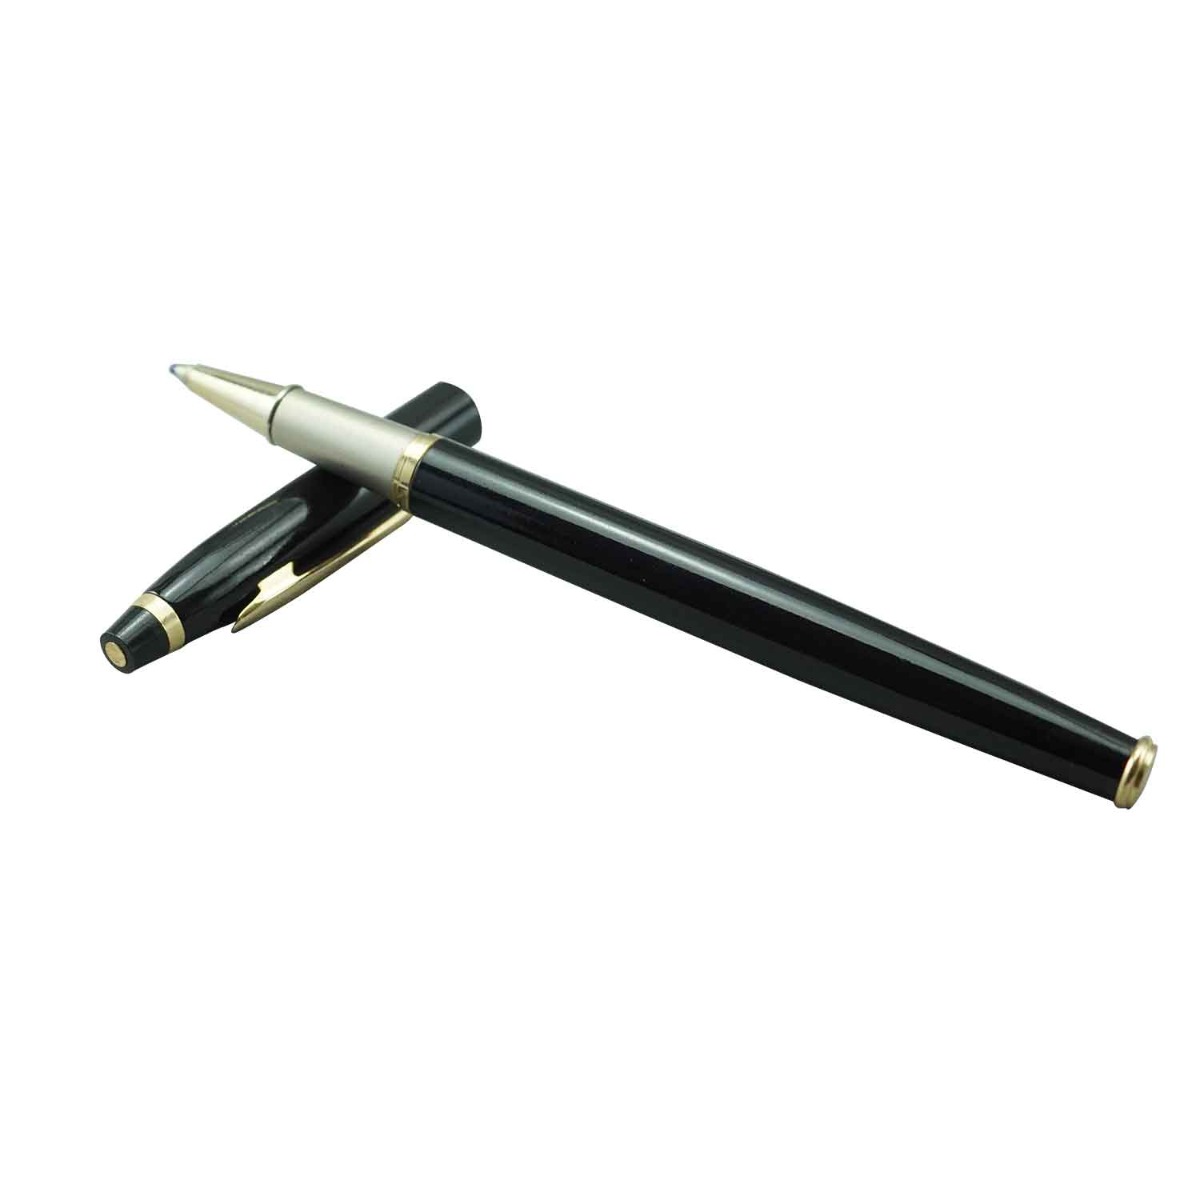 Submarine 2067  Model:15969  Cris Glossy Finish Full Black Color Body  With Gold Clip  Slim  Fine Tip Cap Type Gel Pen